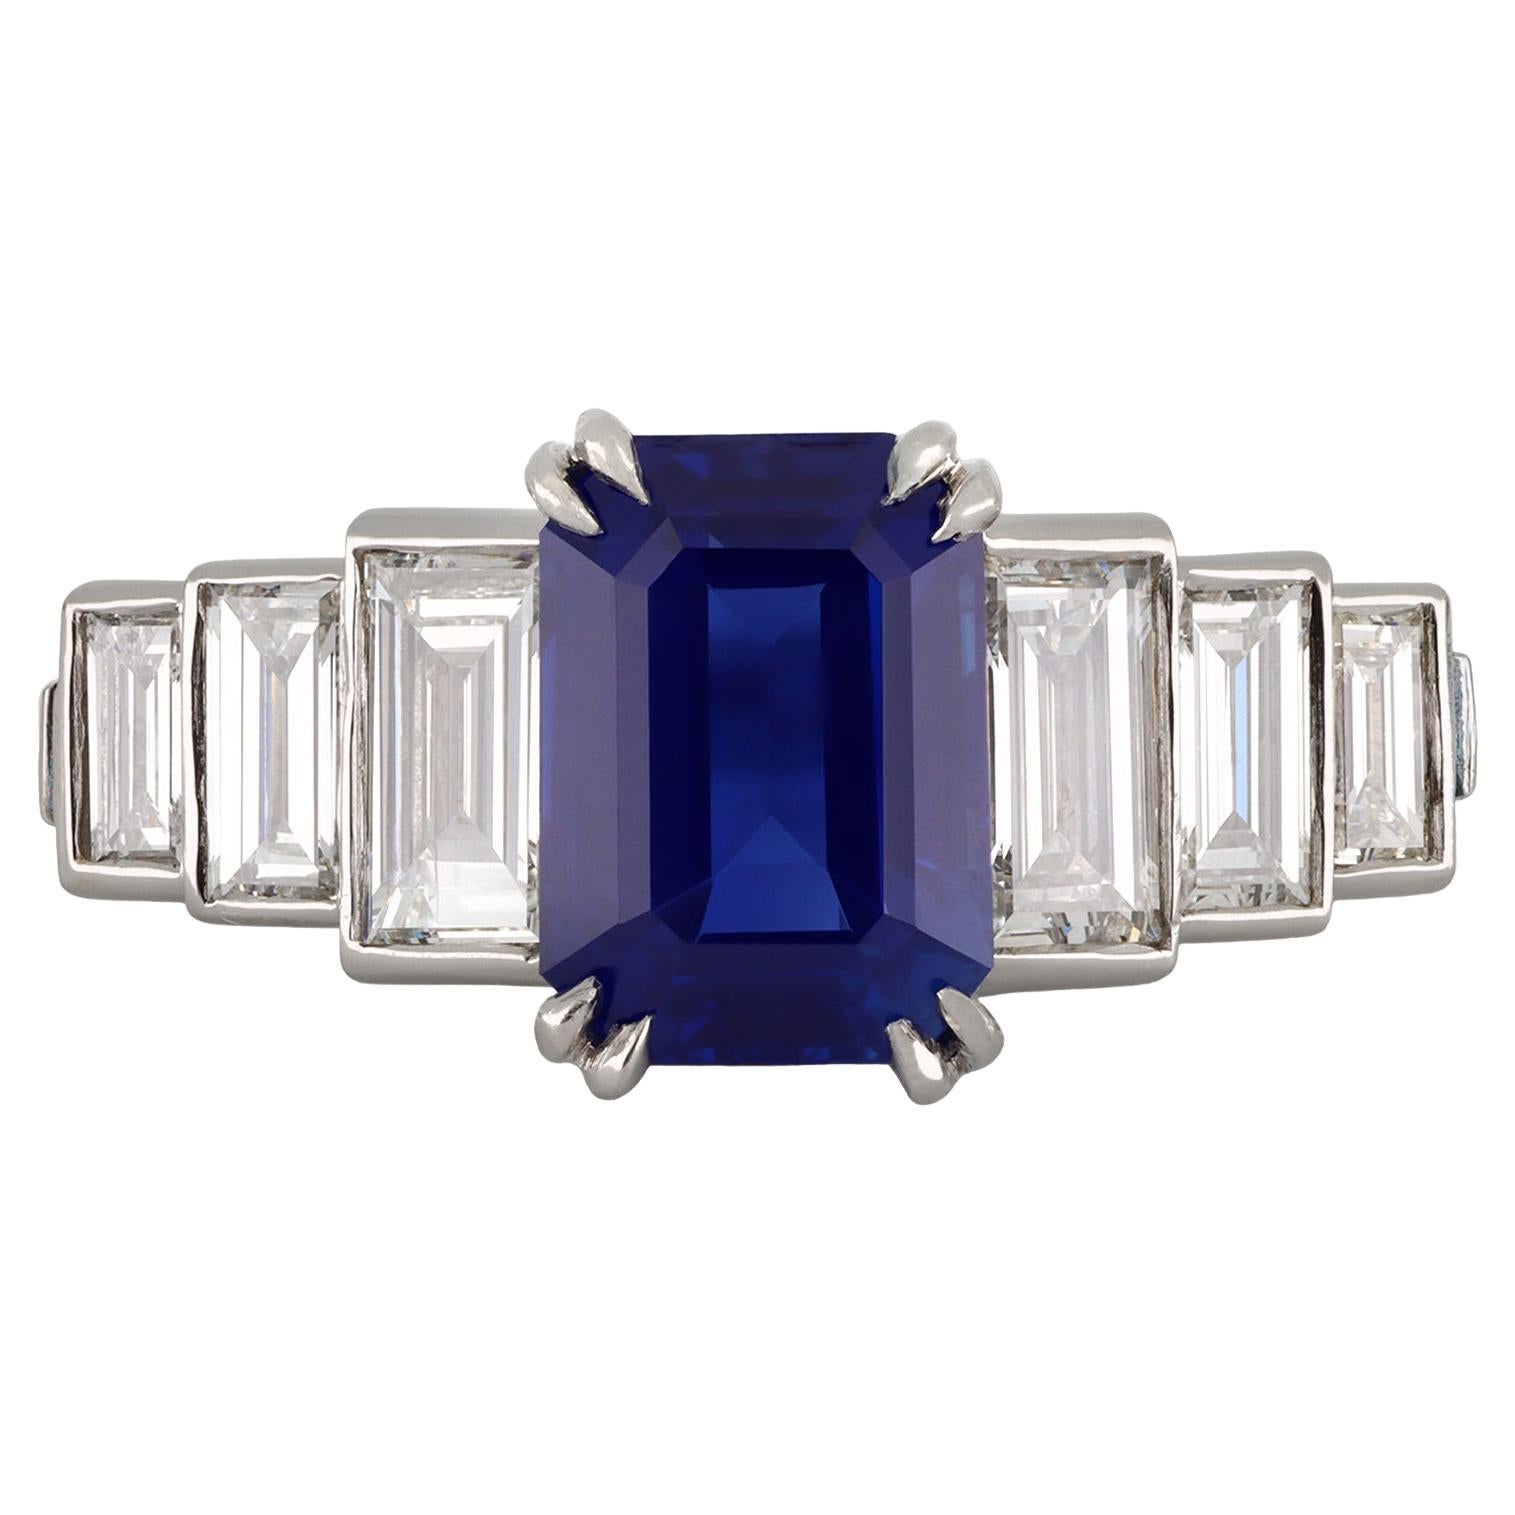 Natural Unenhanced Kashmir Sapphire Diamond Ring, circa 1935 For Sale